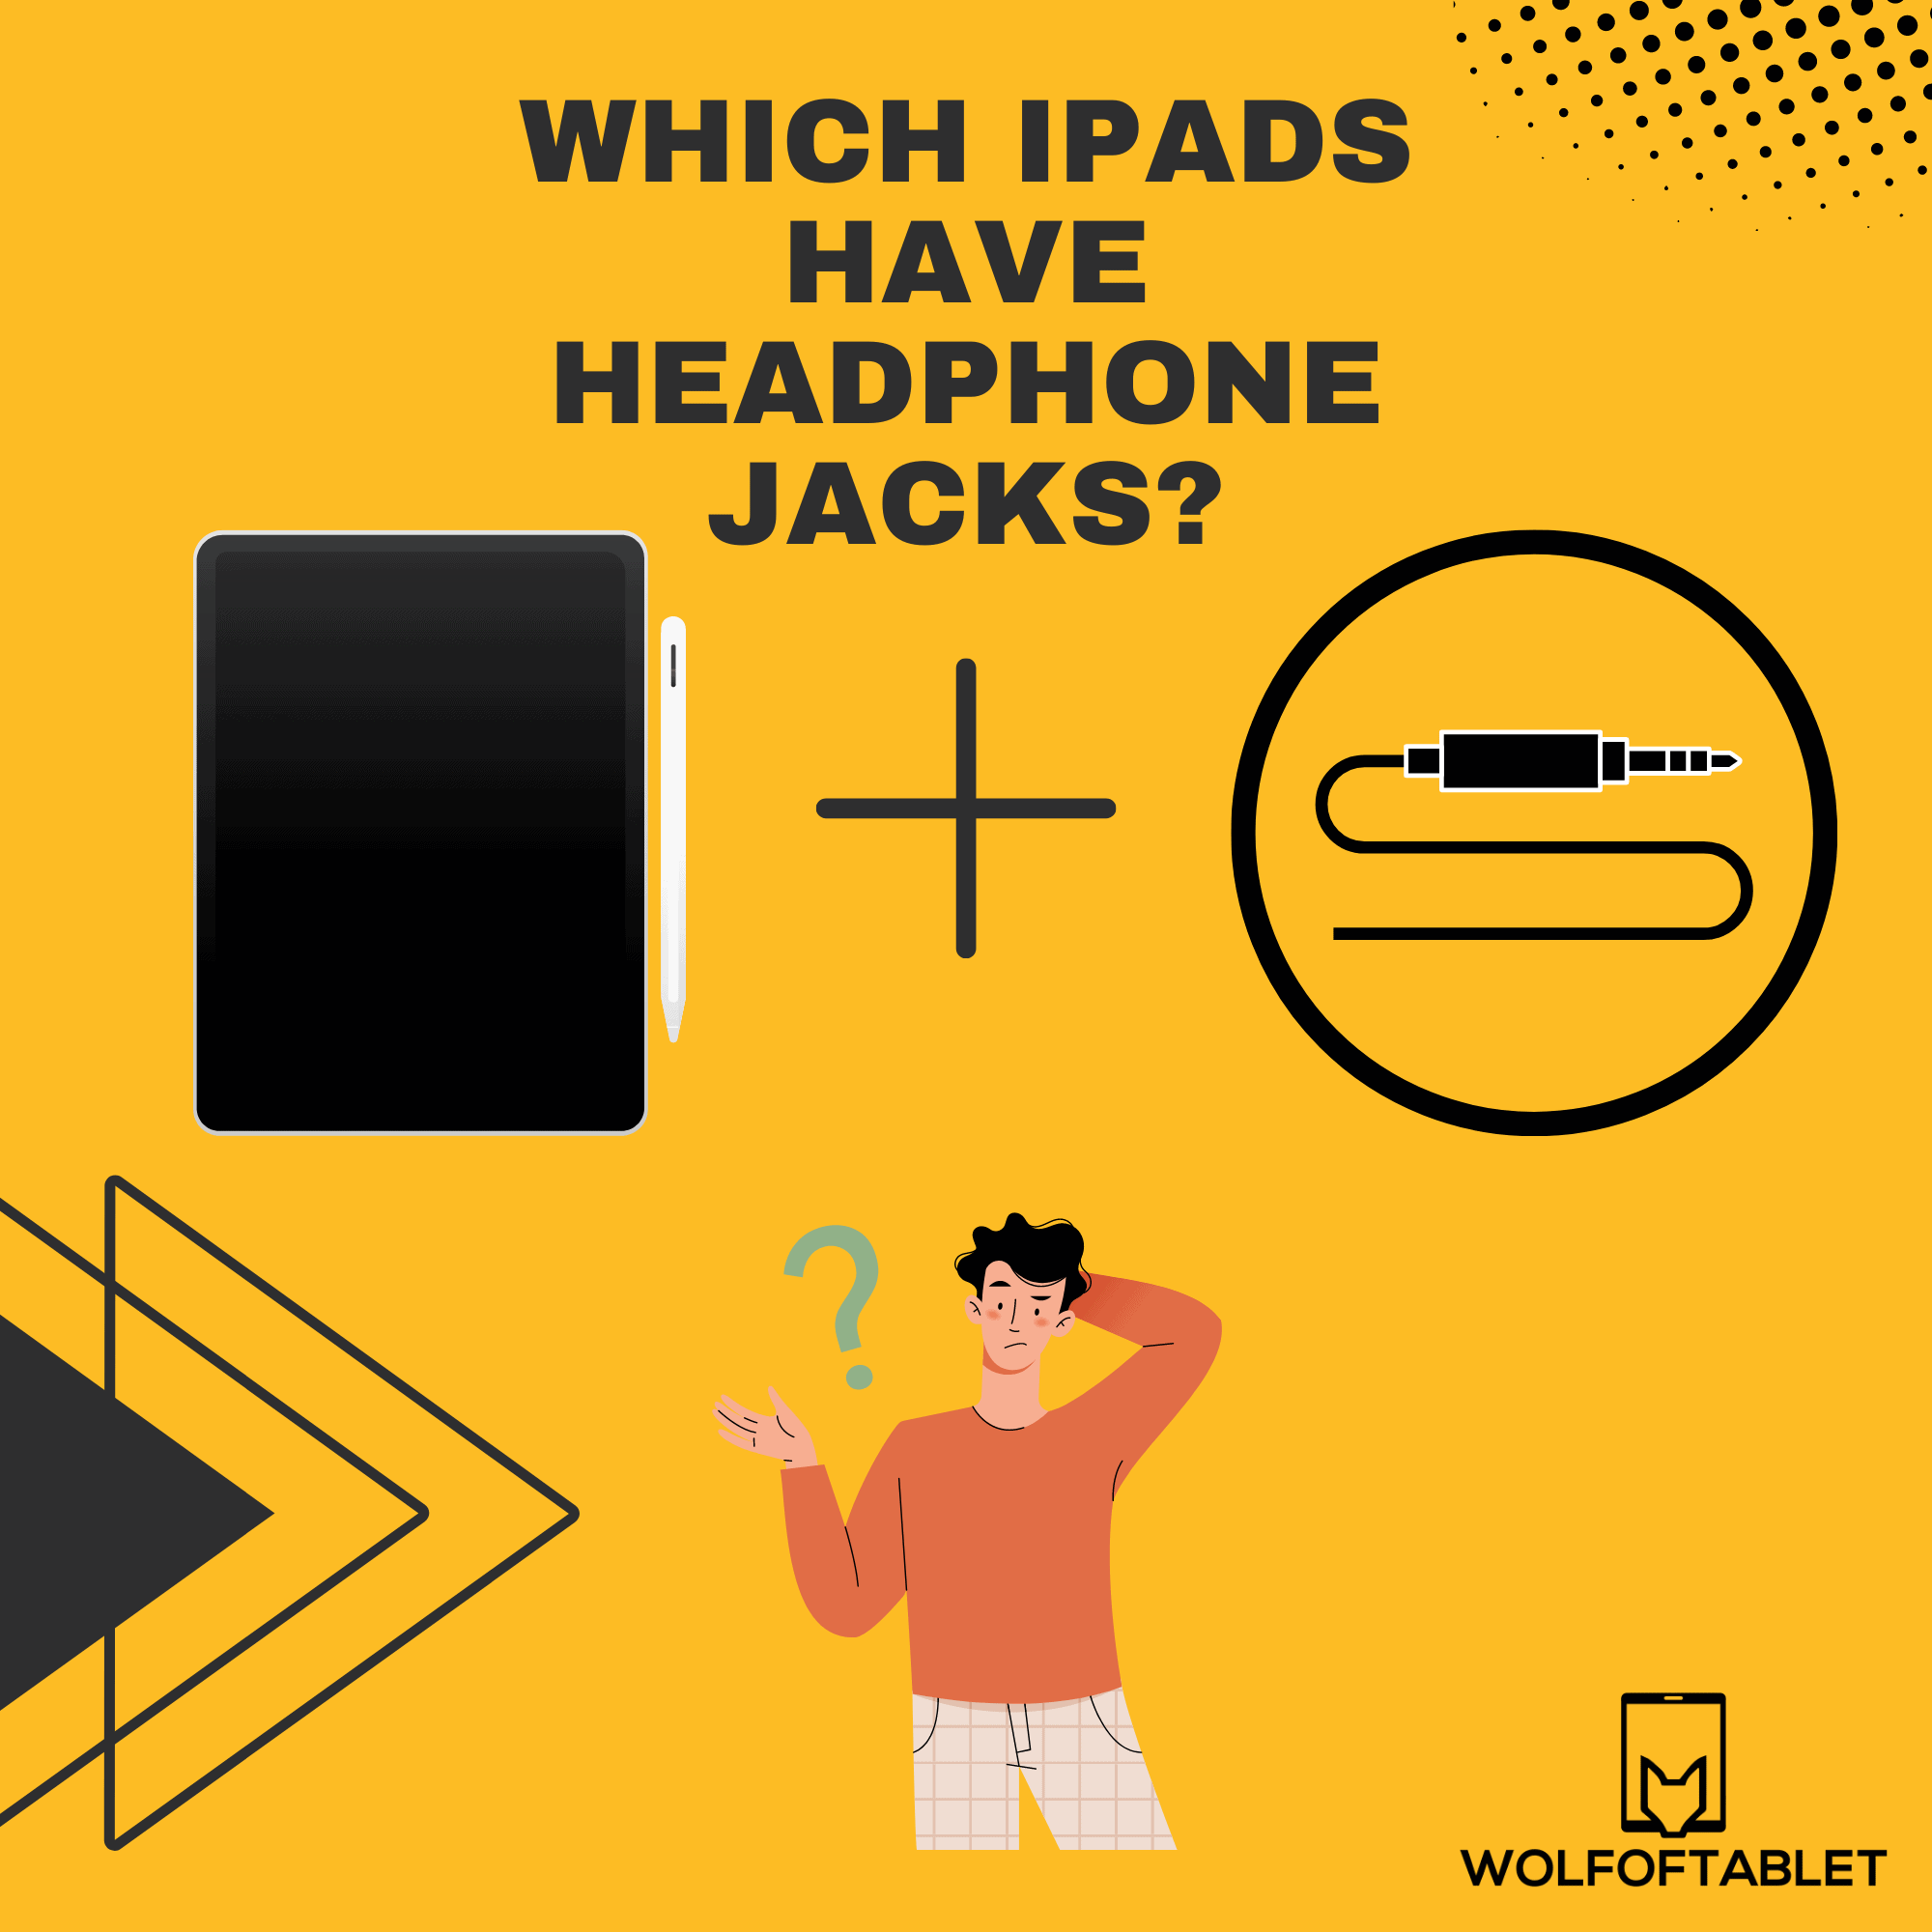 do ipads have headphone jacks? which ones? full list of ipads with headphone jacks